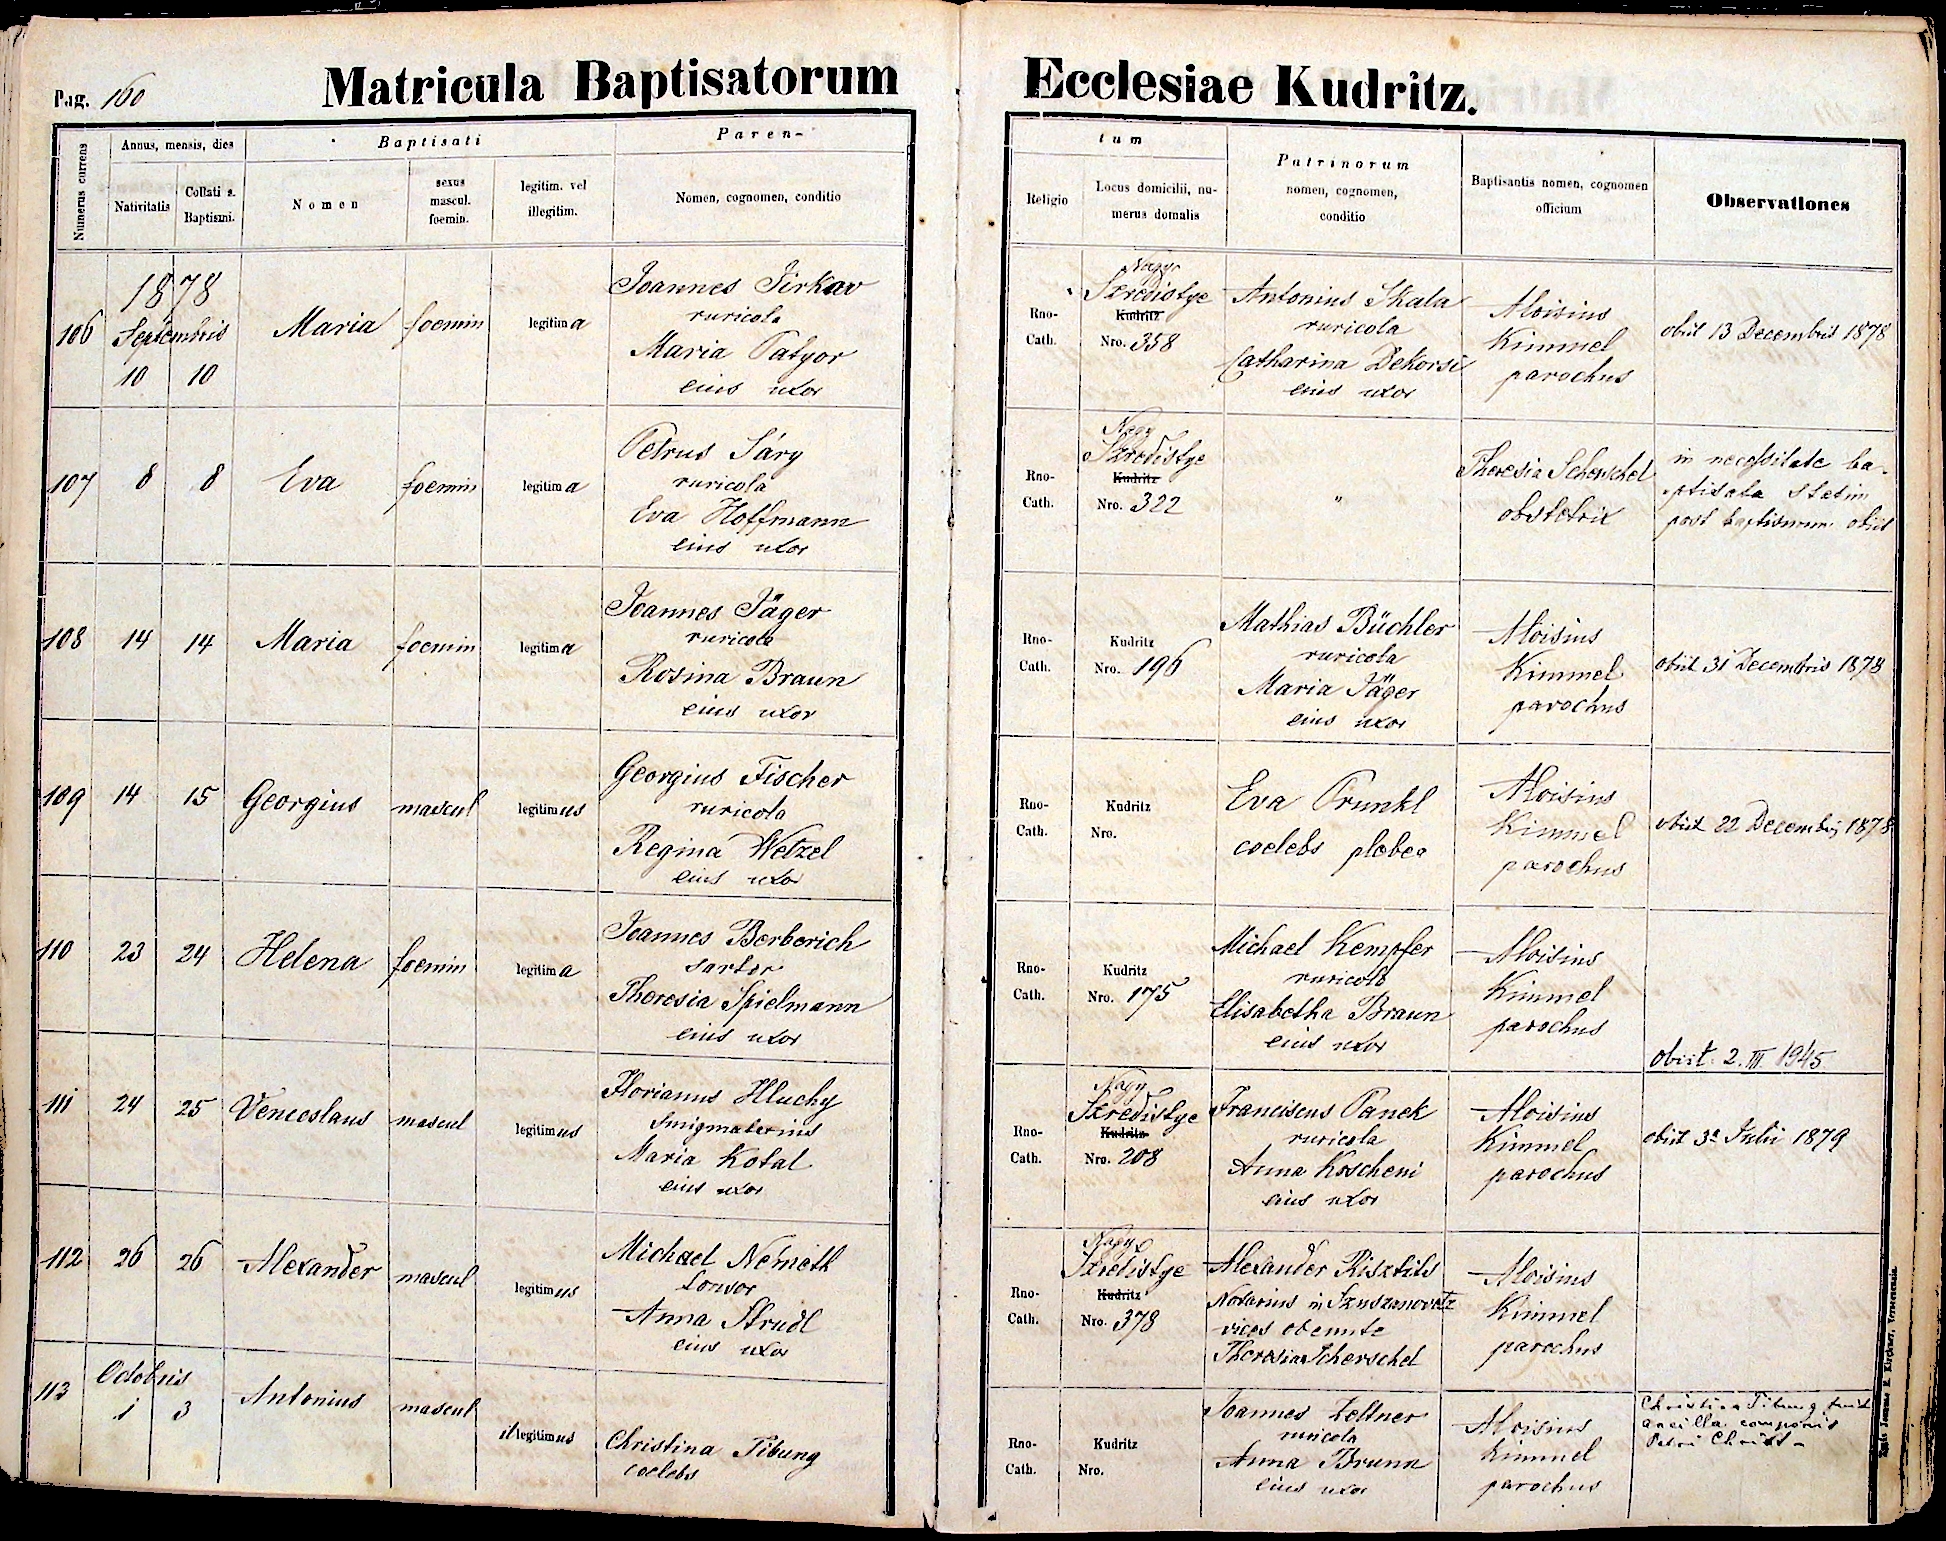 images/church_records/BIRTHS/1870-1879B/1878/160